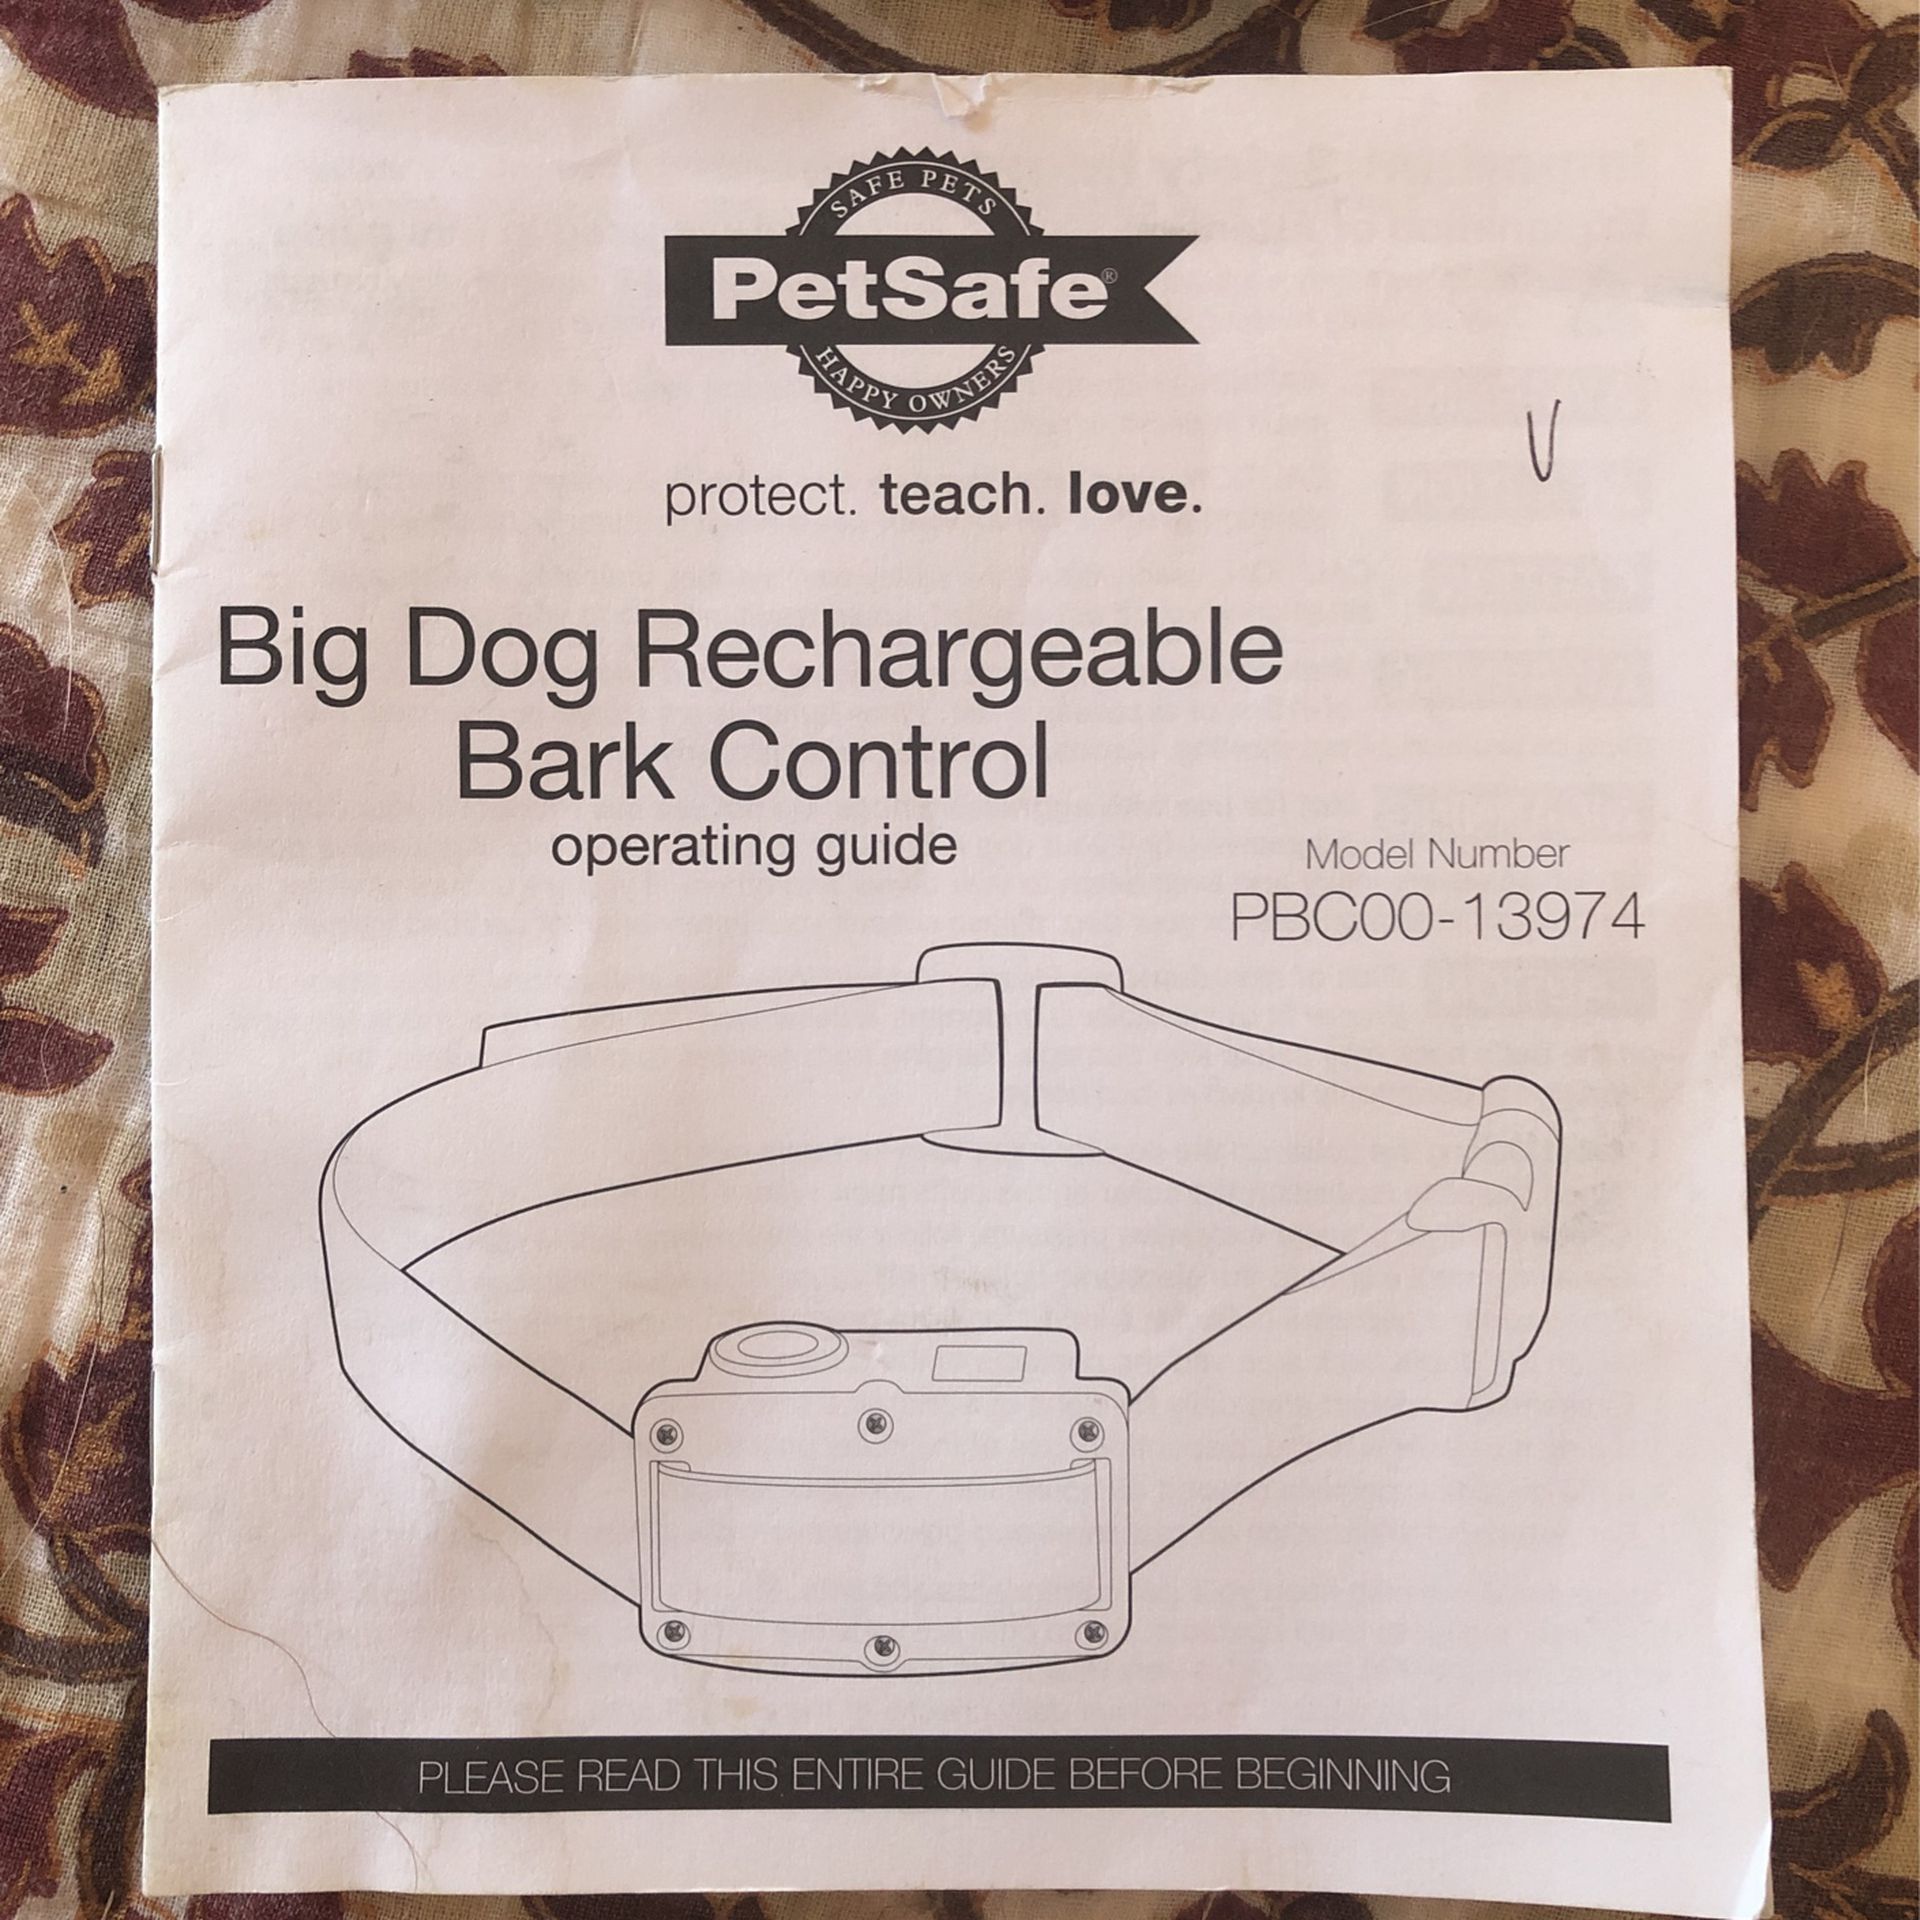 Big Dog Rechargeable Bark Control